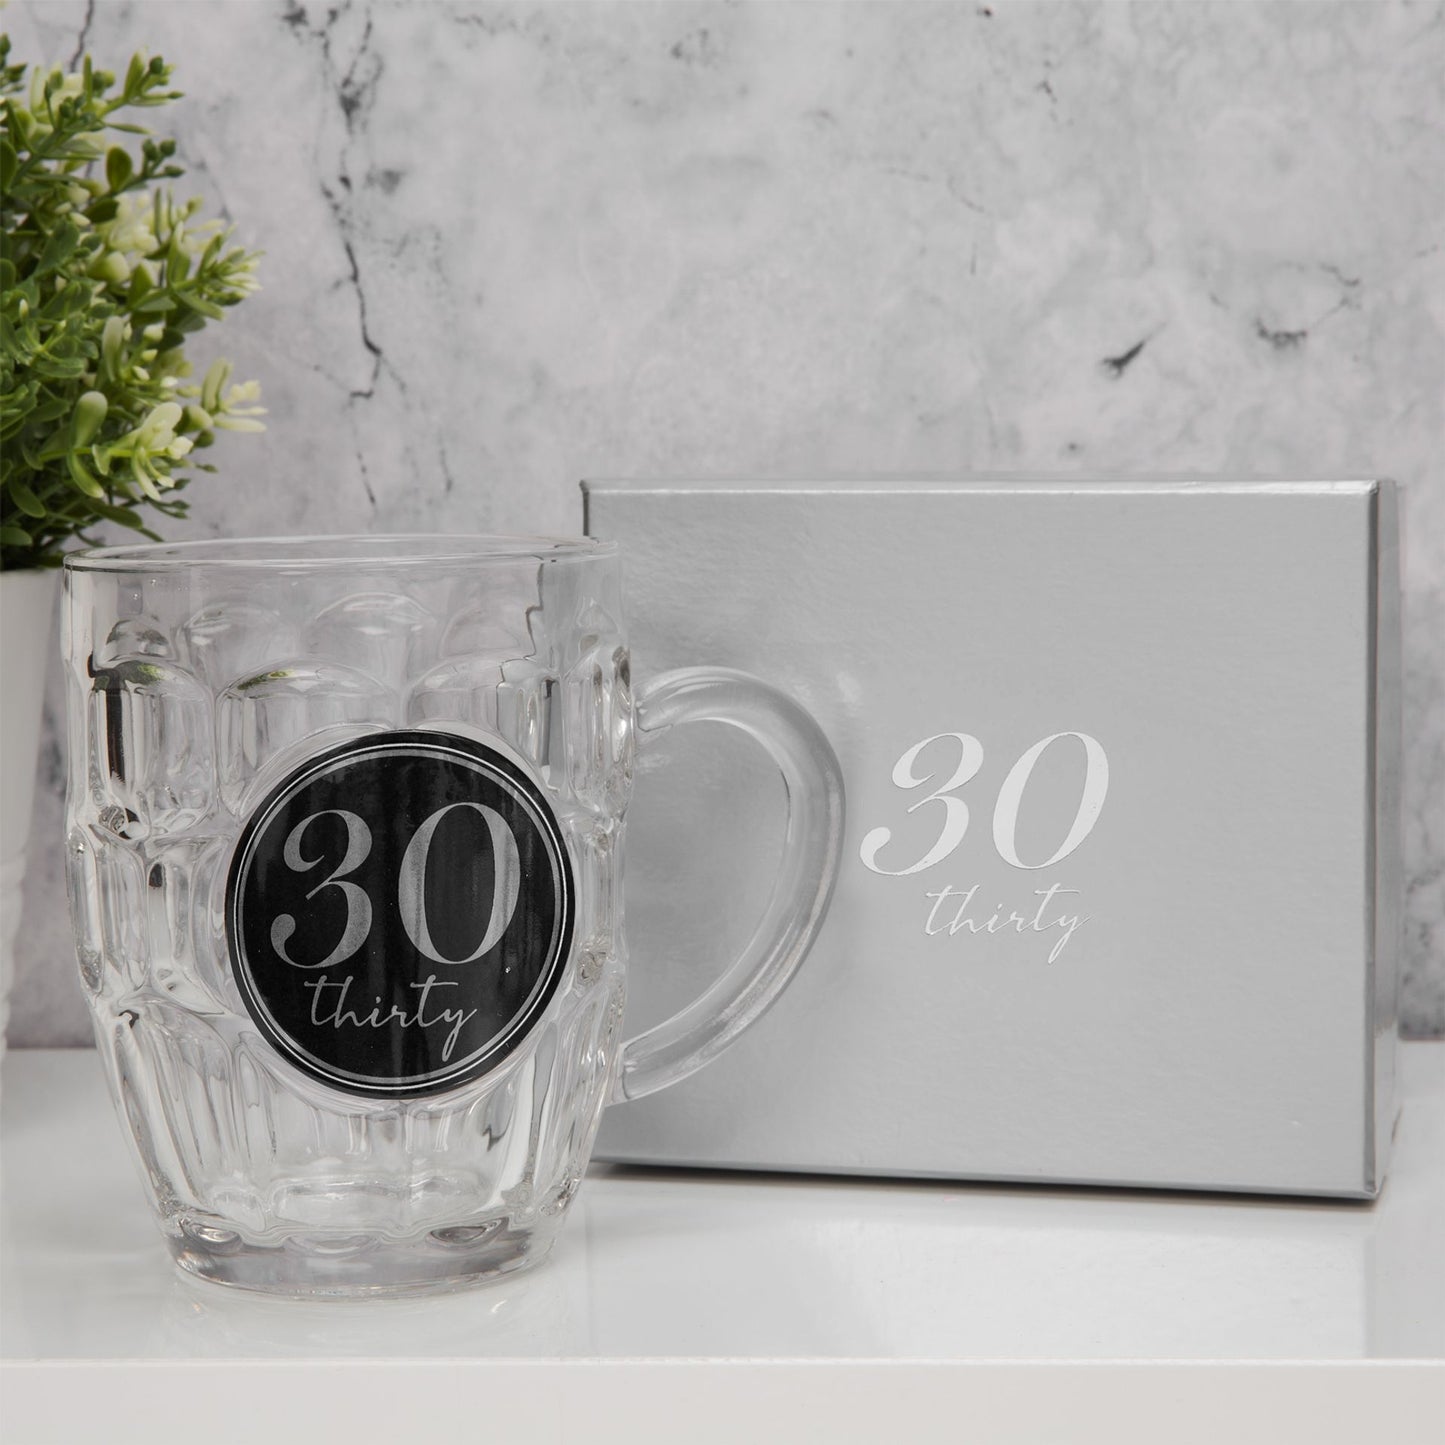 30th Birthday Glass Tankard Beer Mug in Gift Box